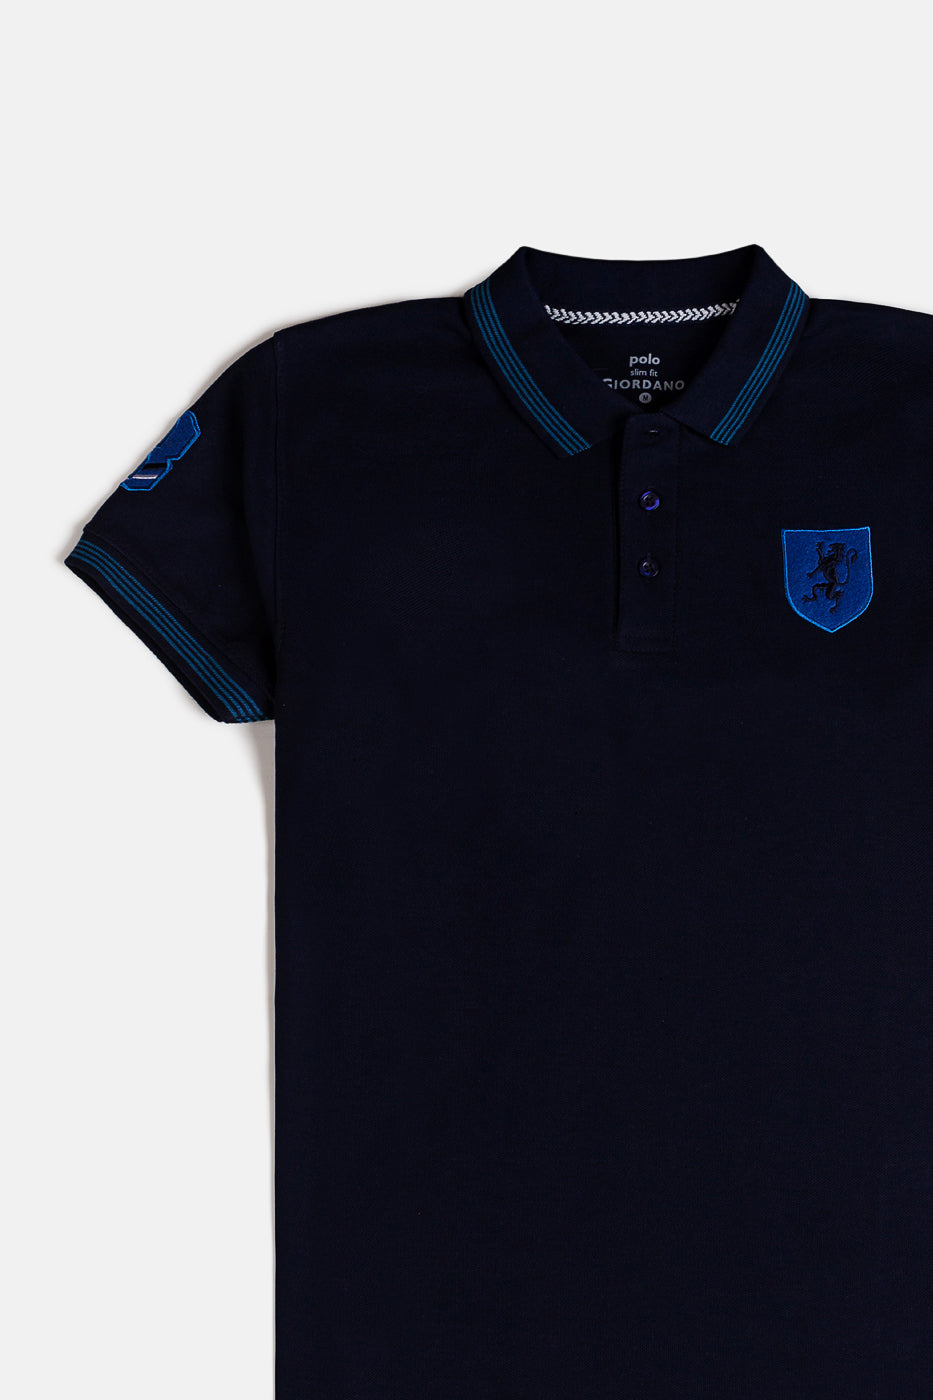 GRDNO Premium Imported Polo Shirt - Navy Blue